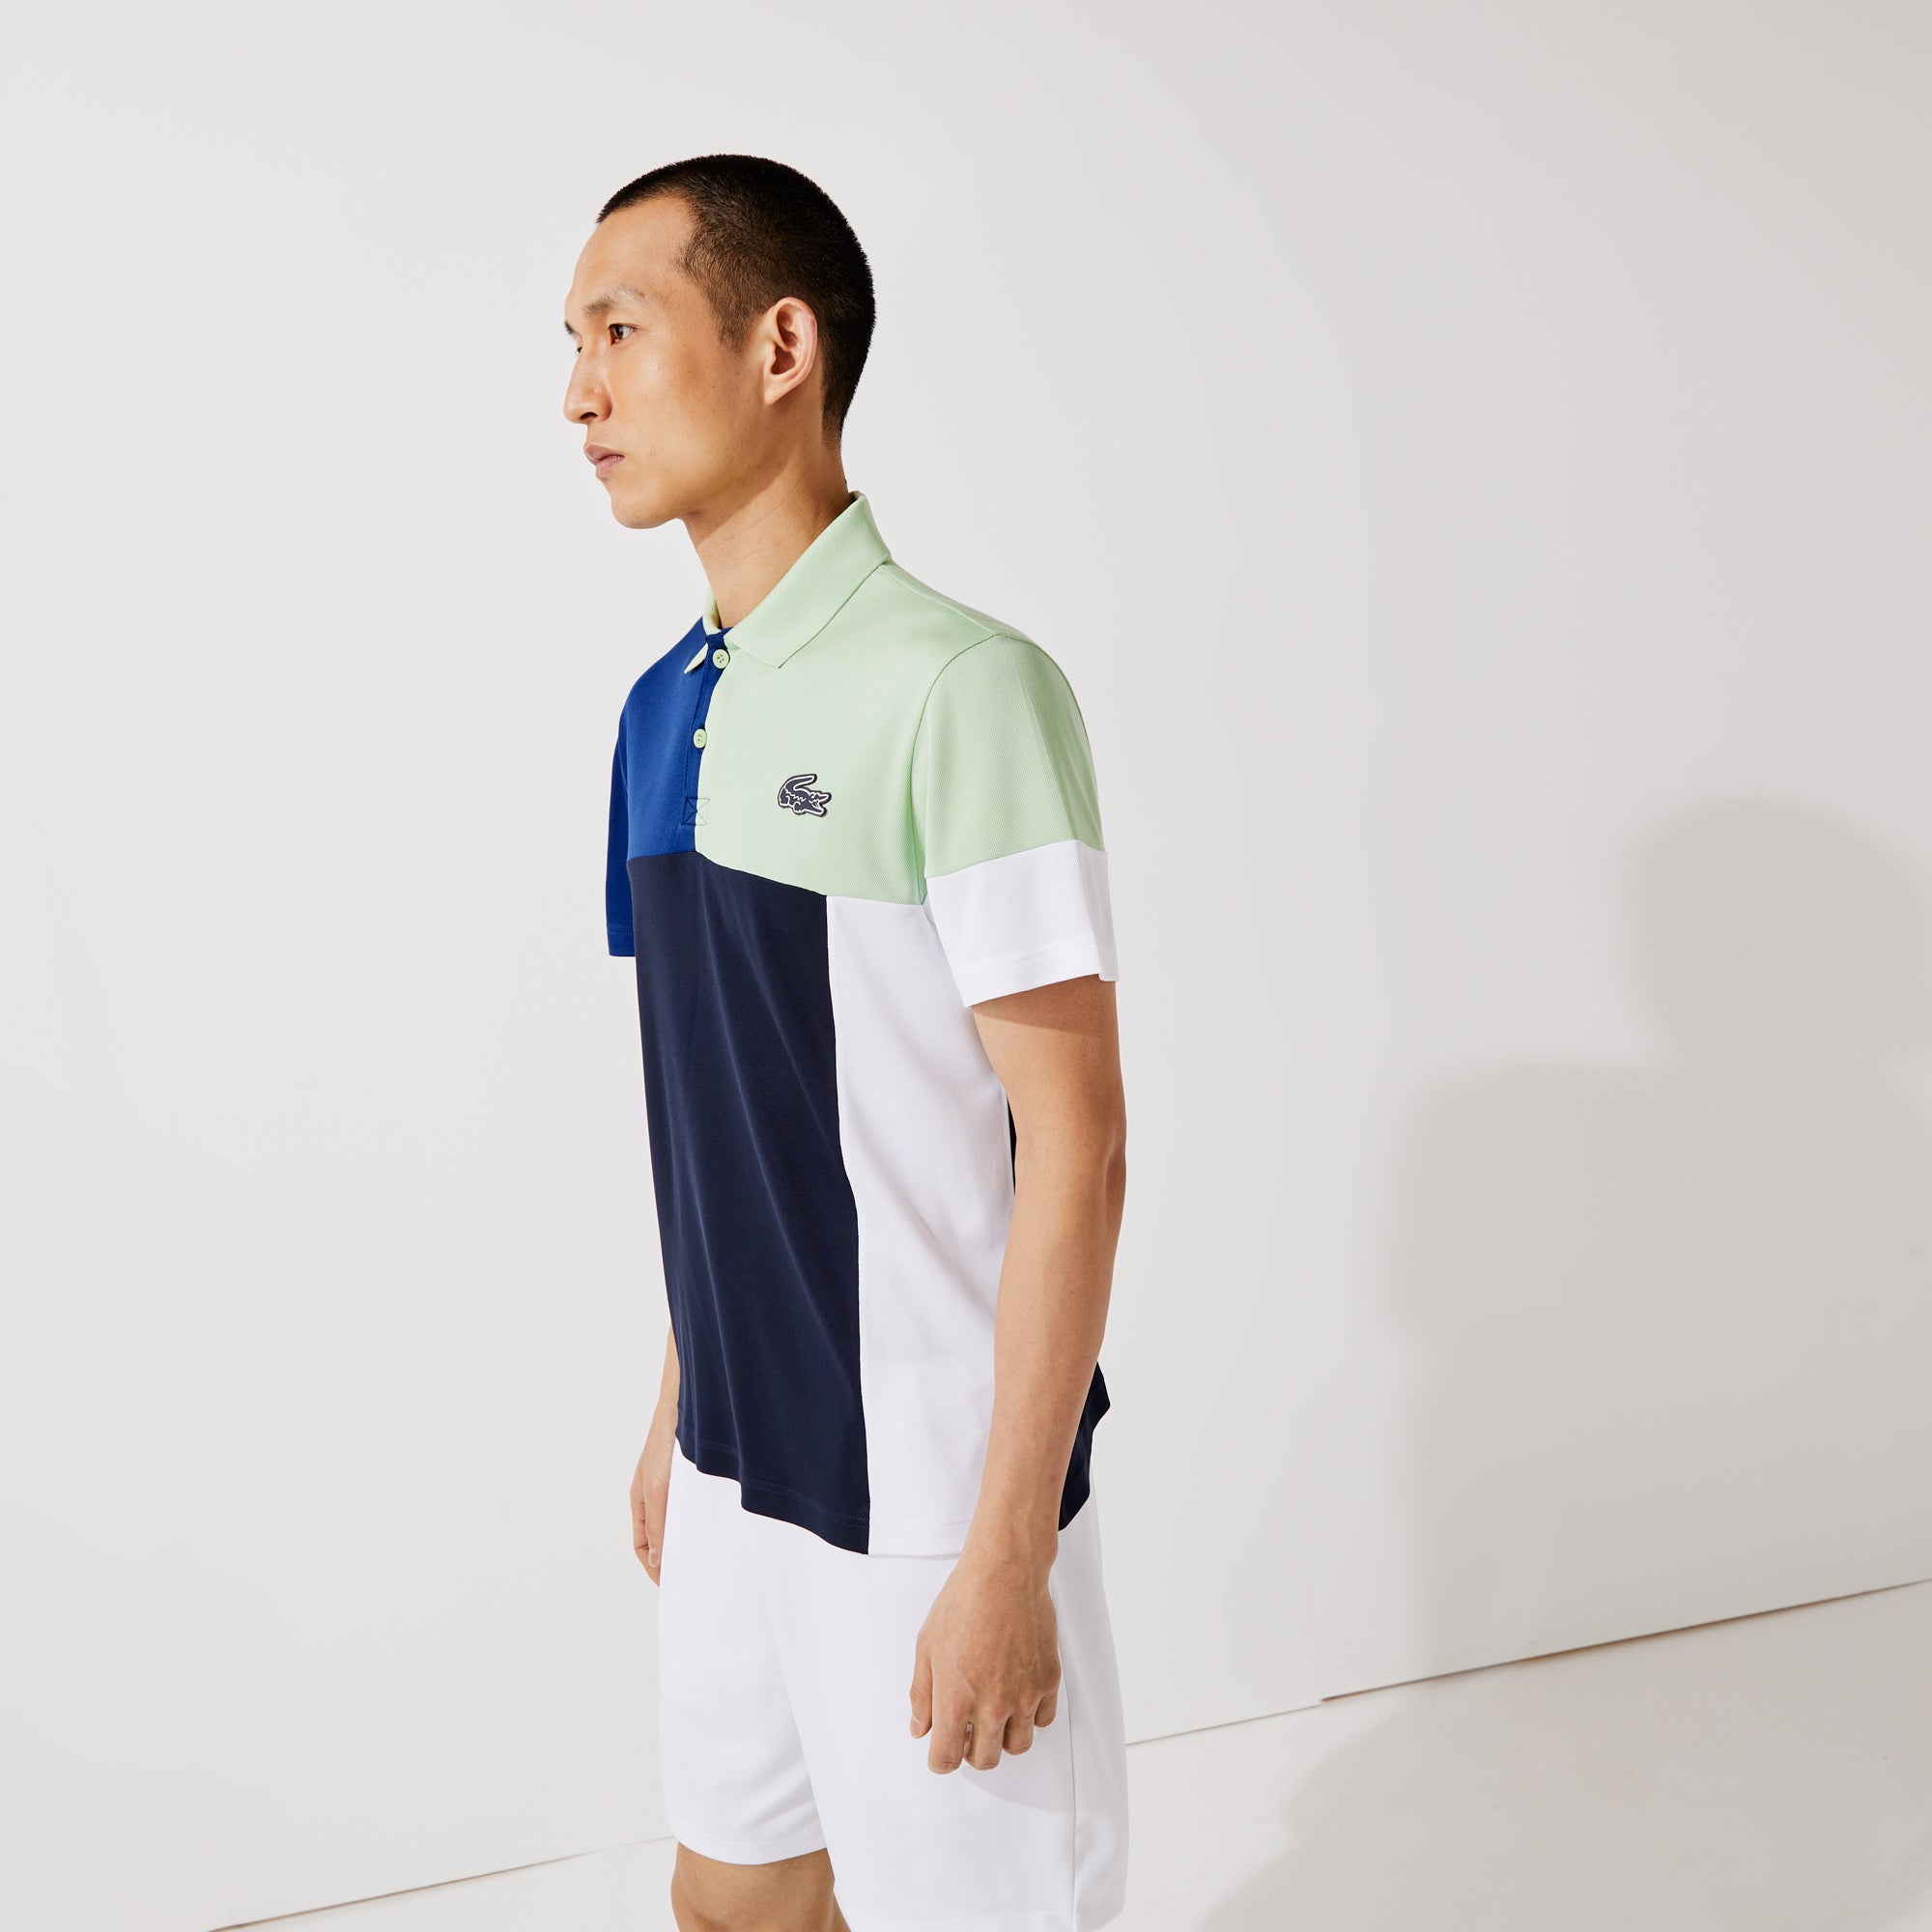 Lacoste Ultra Dry Men's Colorblock Tennis Polo Green (4)